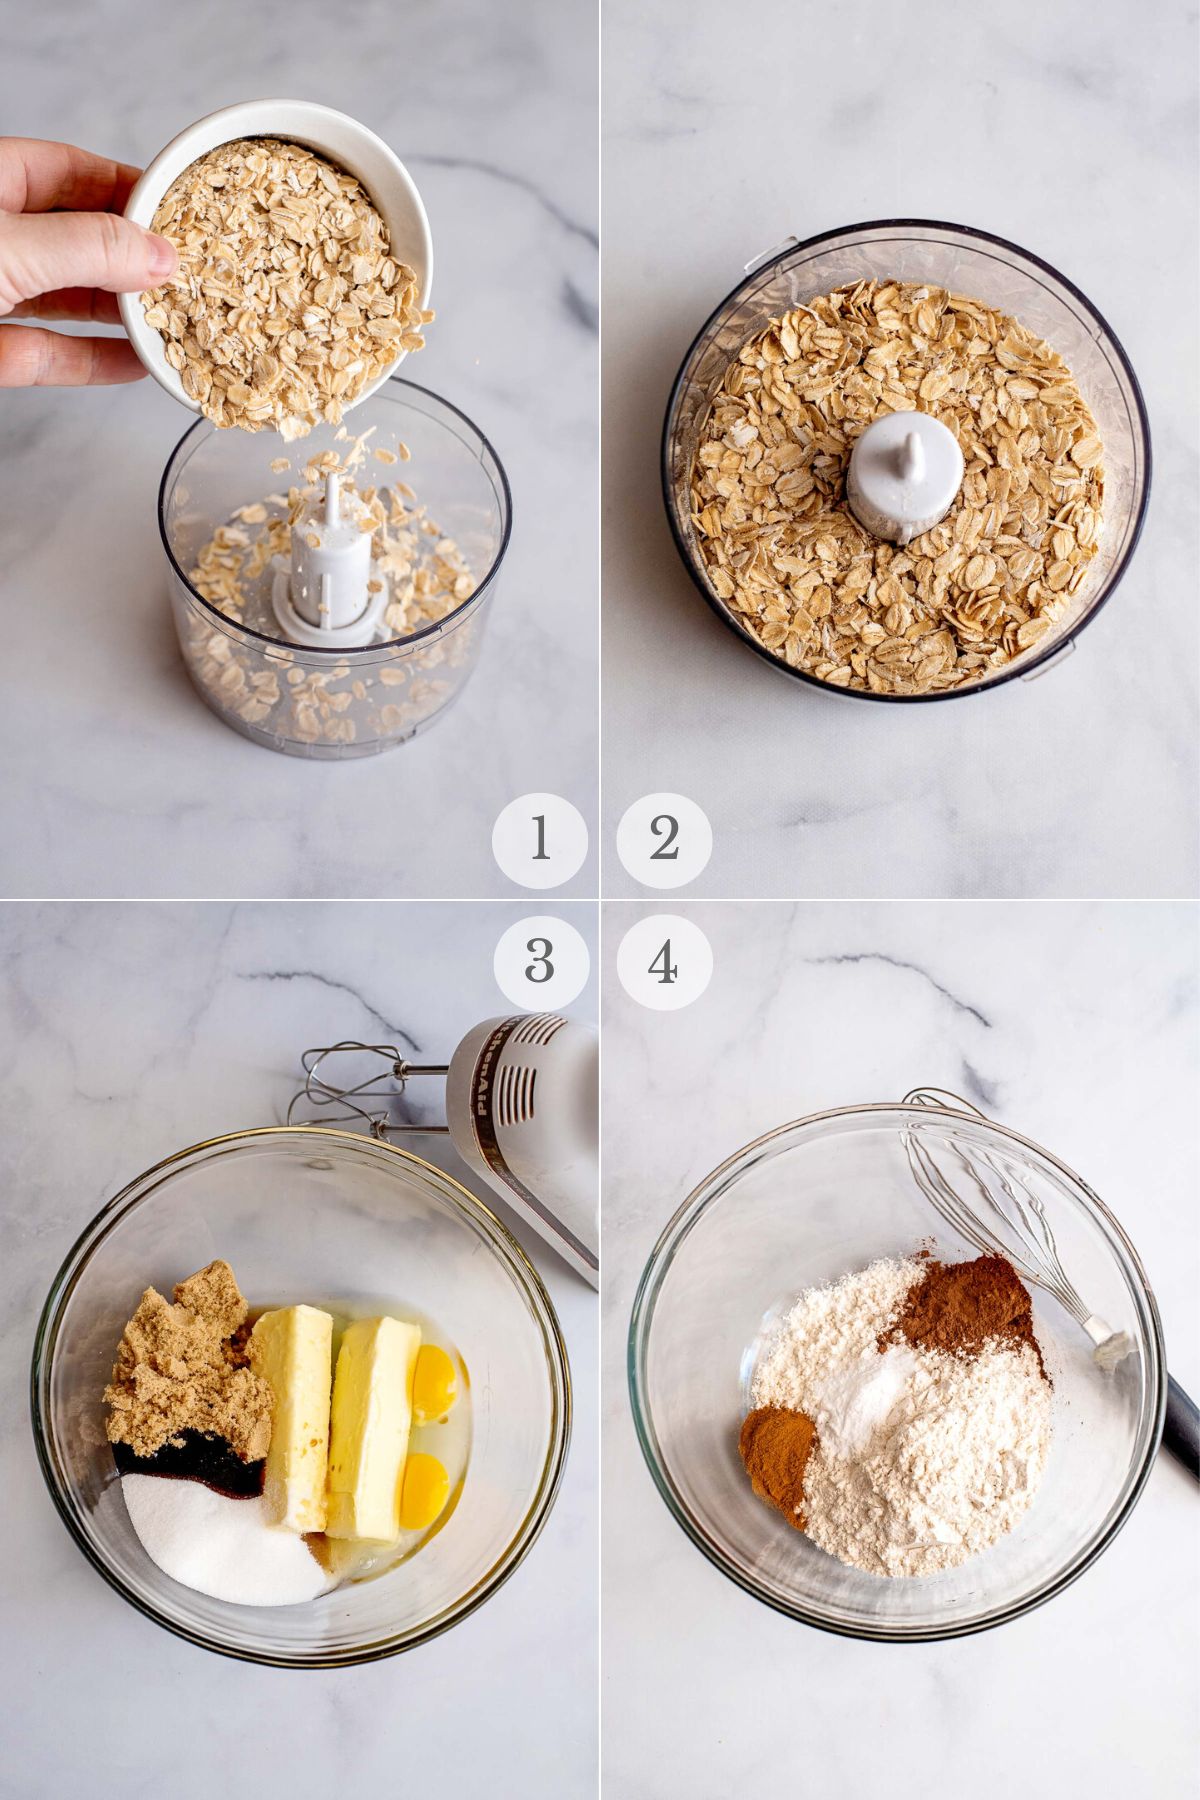 oatmeal cream pies recipe steps 1-4.